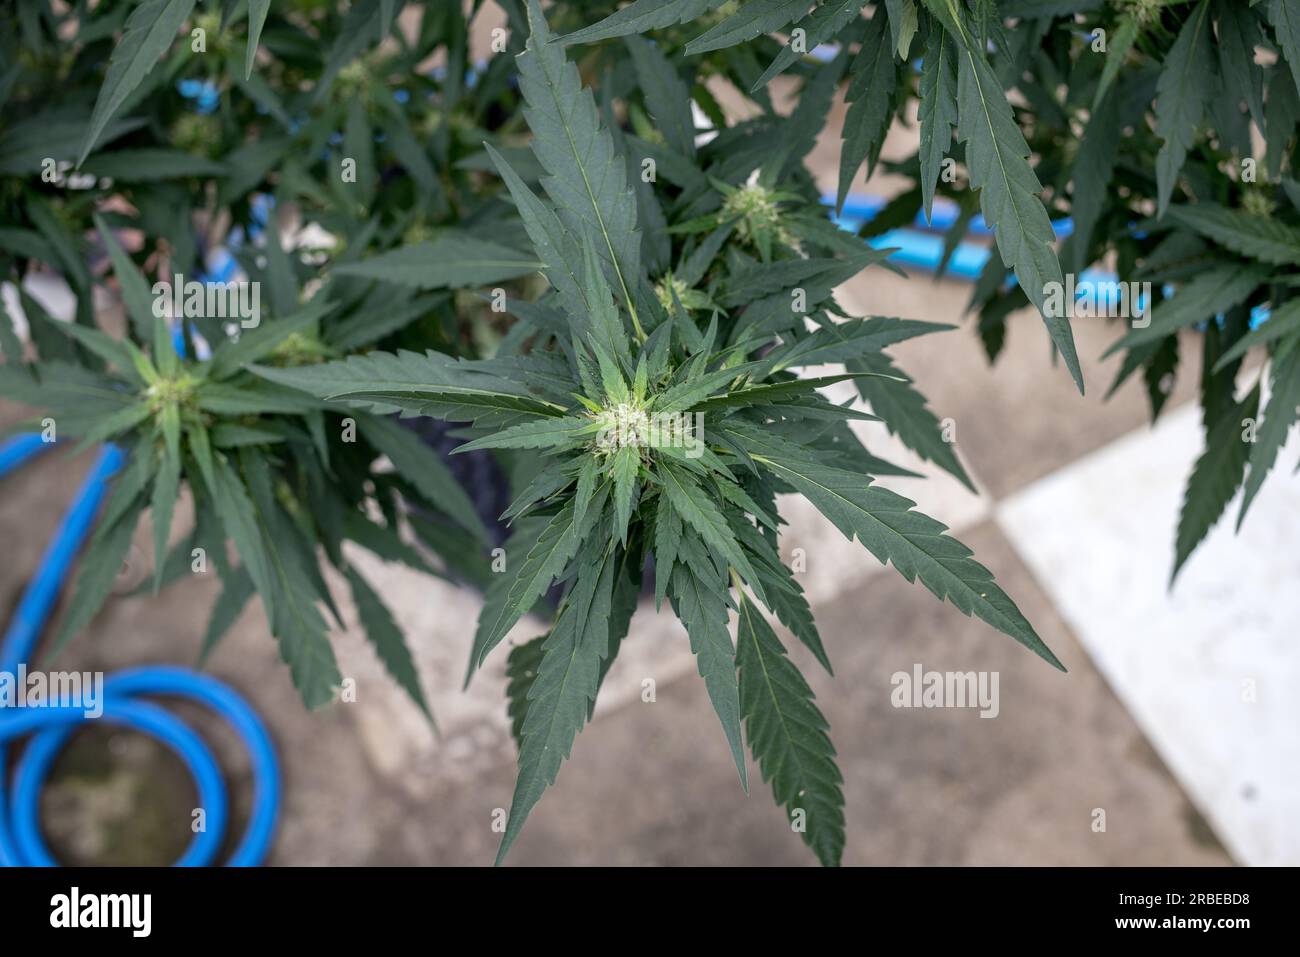 Marijuana buds and digital scale Stock Photo - Alamy